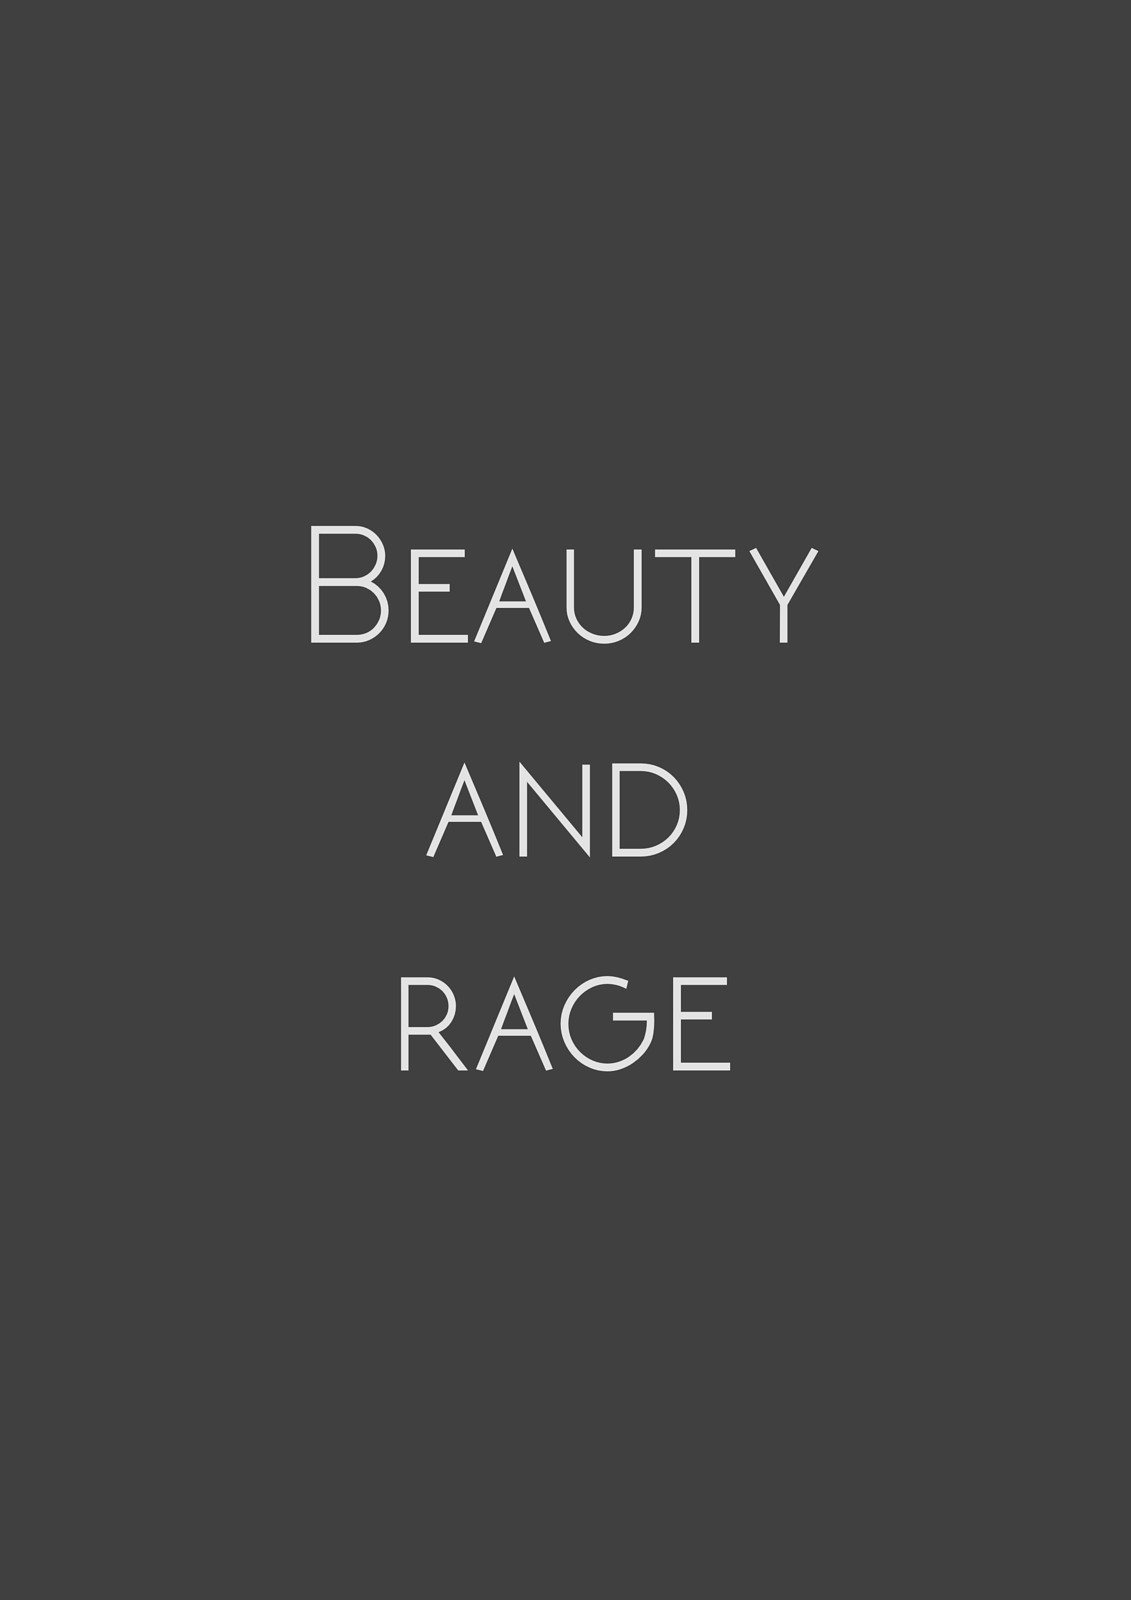 Beauty and rage print